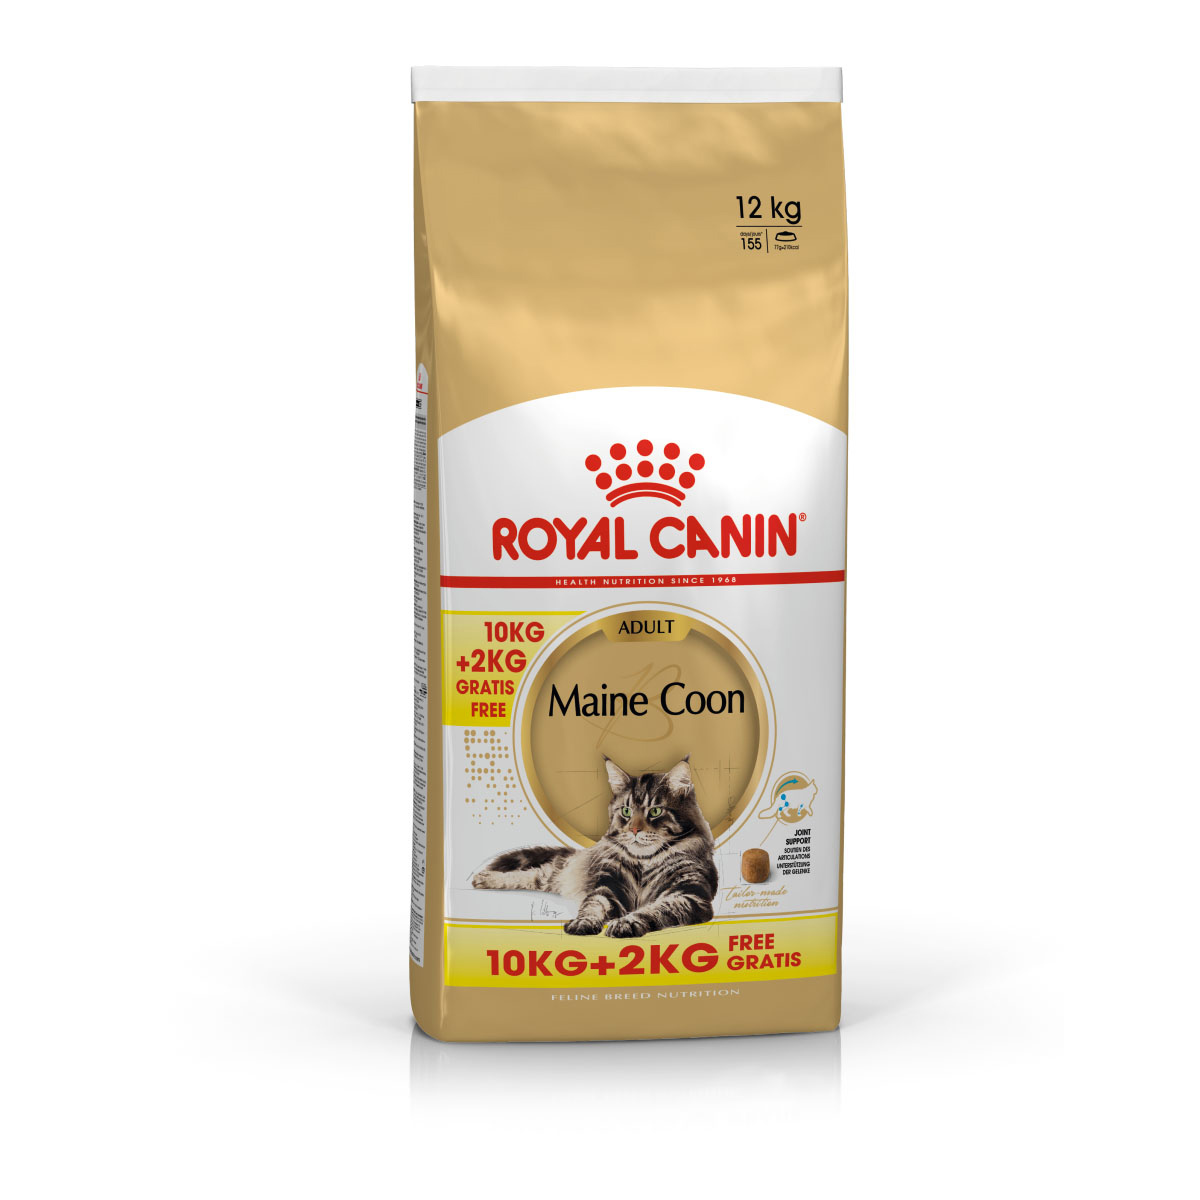 ROYAL CANIN Maine Coon Adult Katzenfutter trocken 10kg+2kg gratis